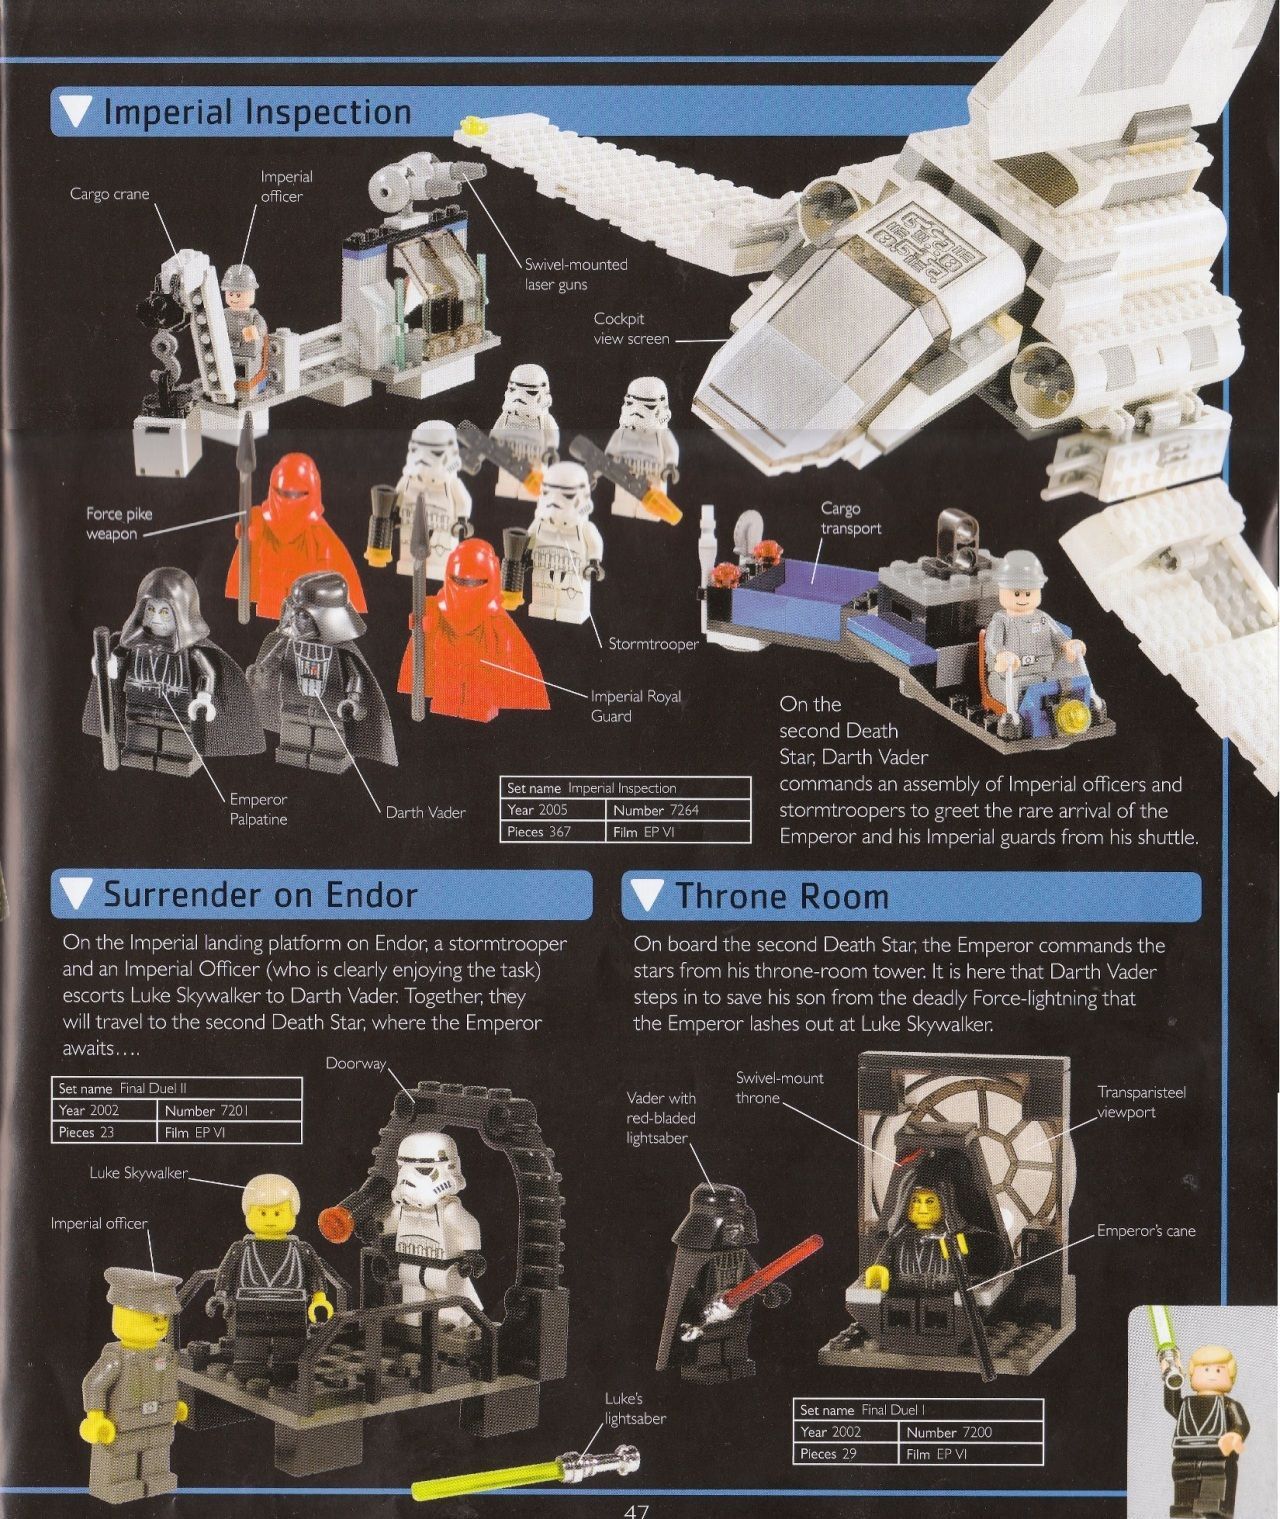 Lego Star Wars The Visual Dictionary 2009 Lego Star Wars The Visual Dictionary 2009 48